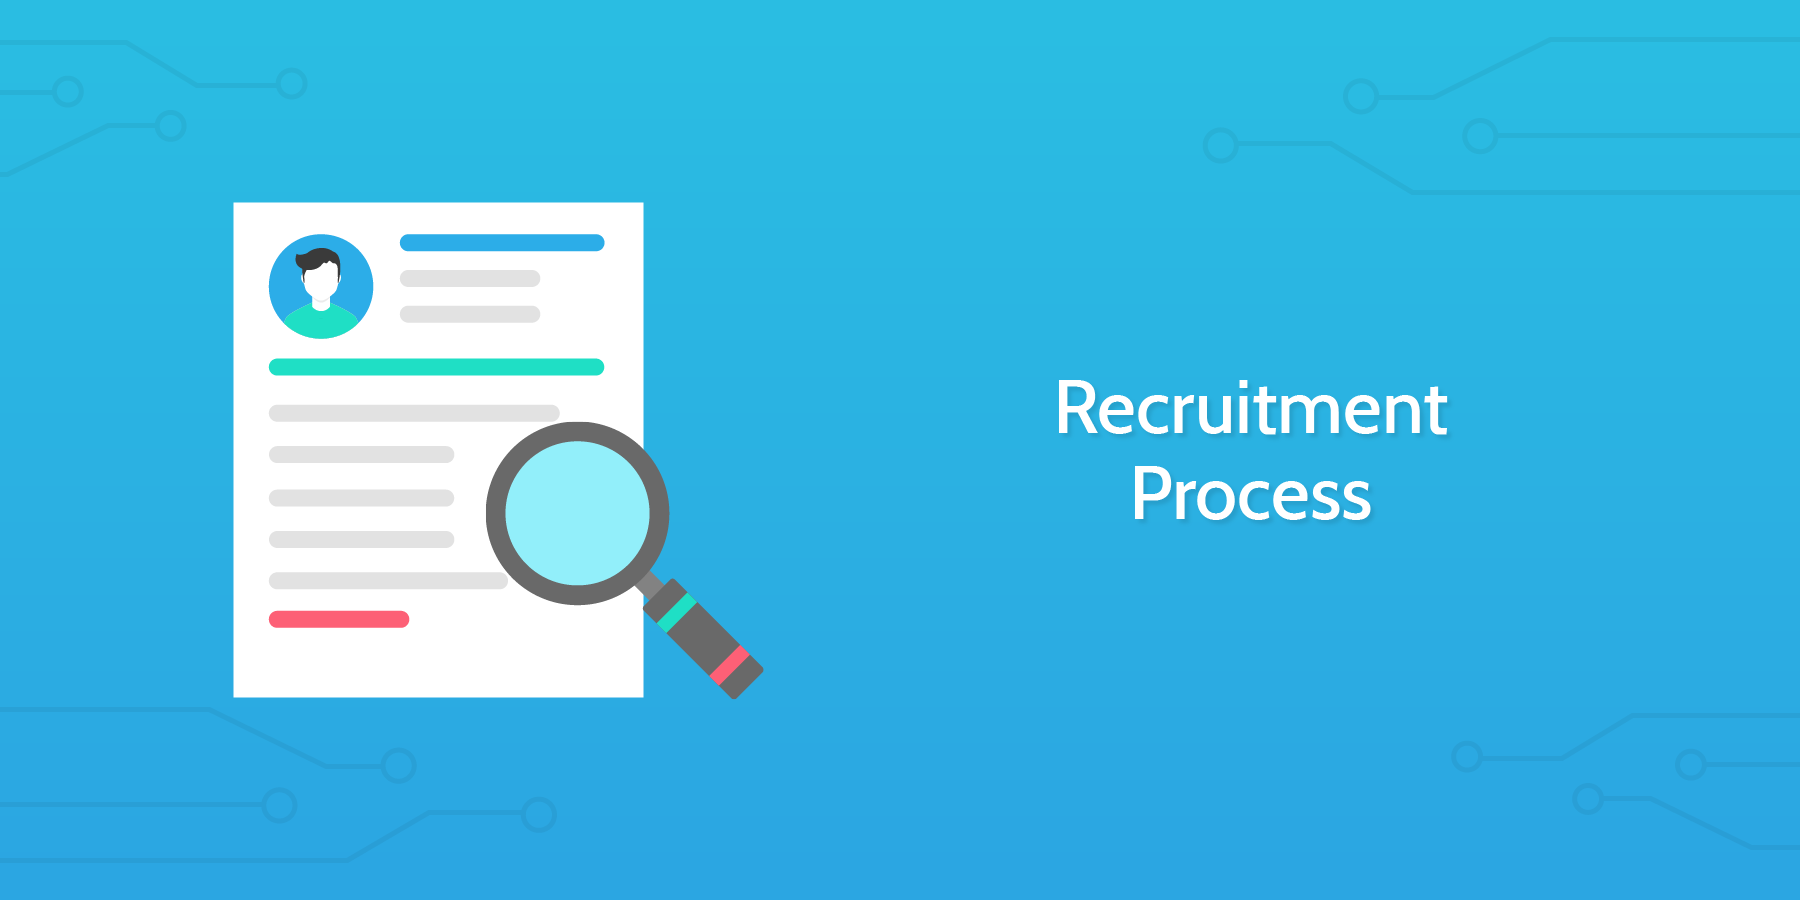 Recruitment Process - introduction